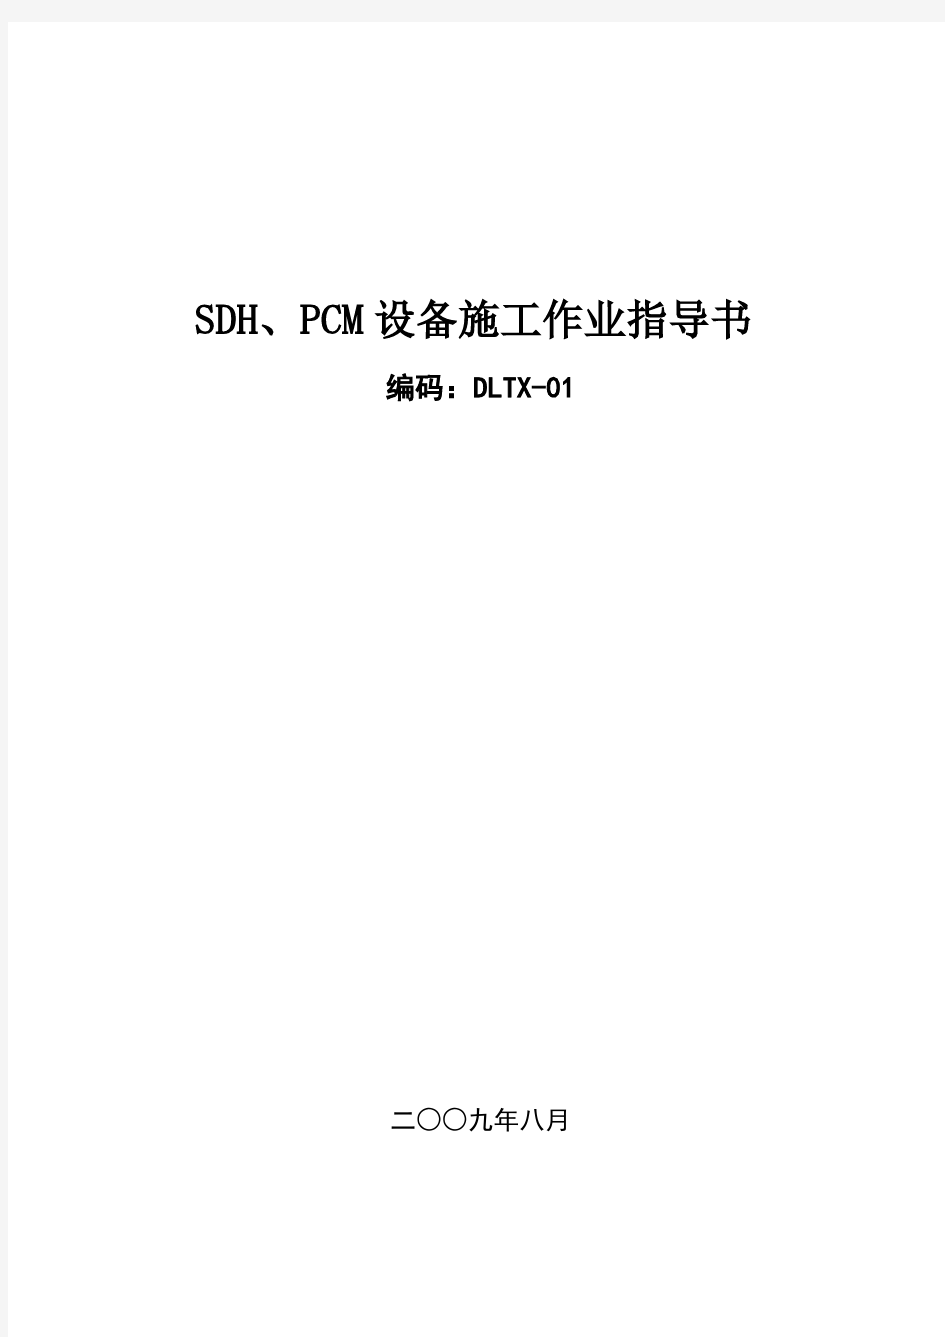 SDH、PCM设备施工作业指导书